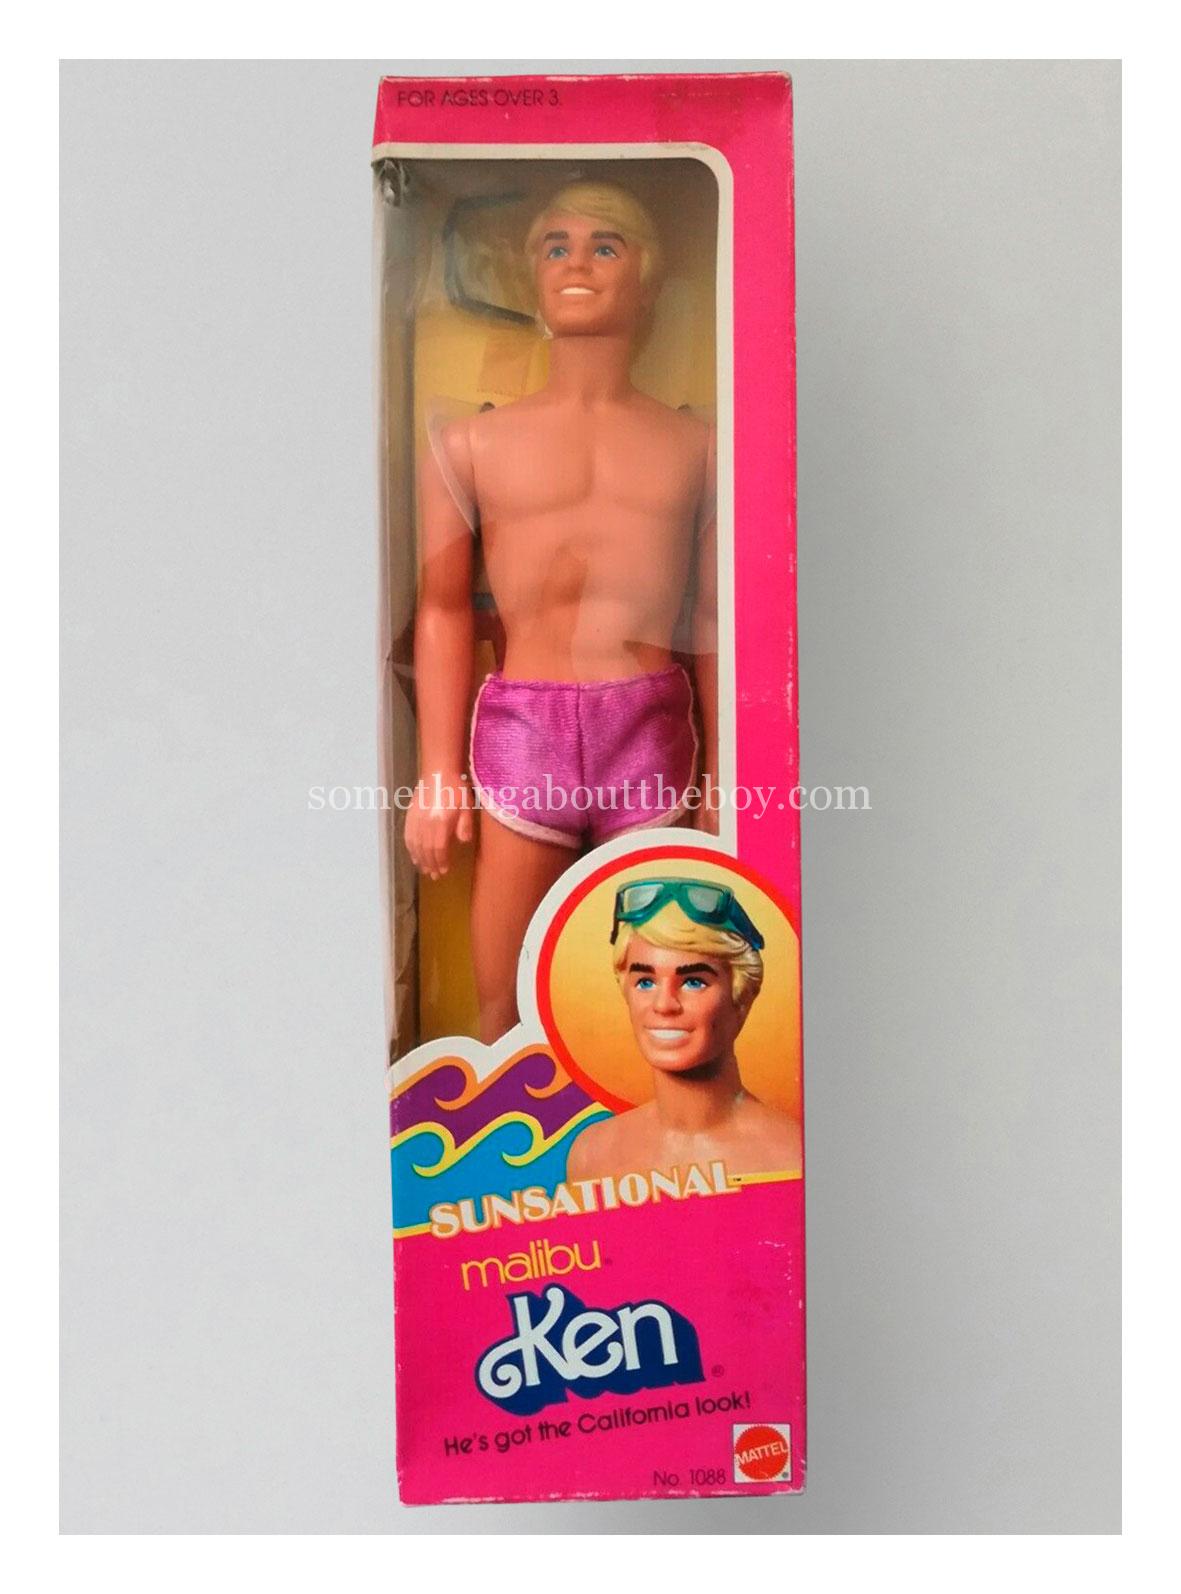 1982 #1088 Sunsational Malibu Ken in original packaging